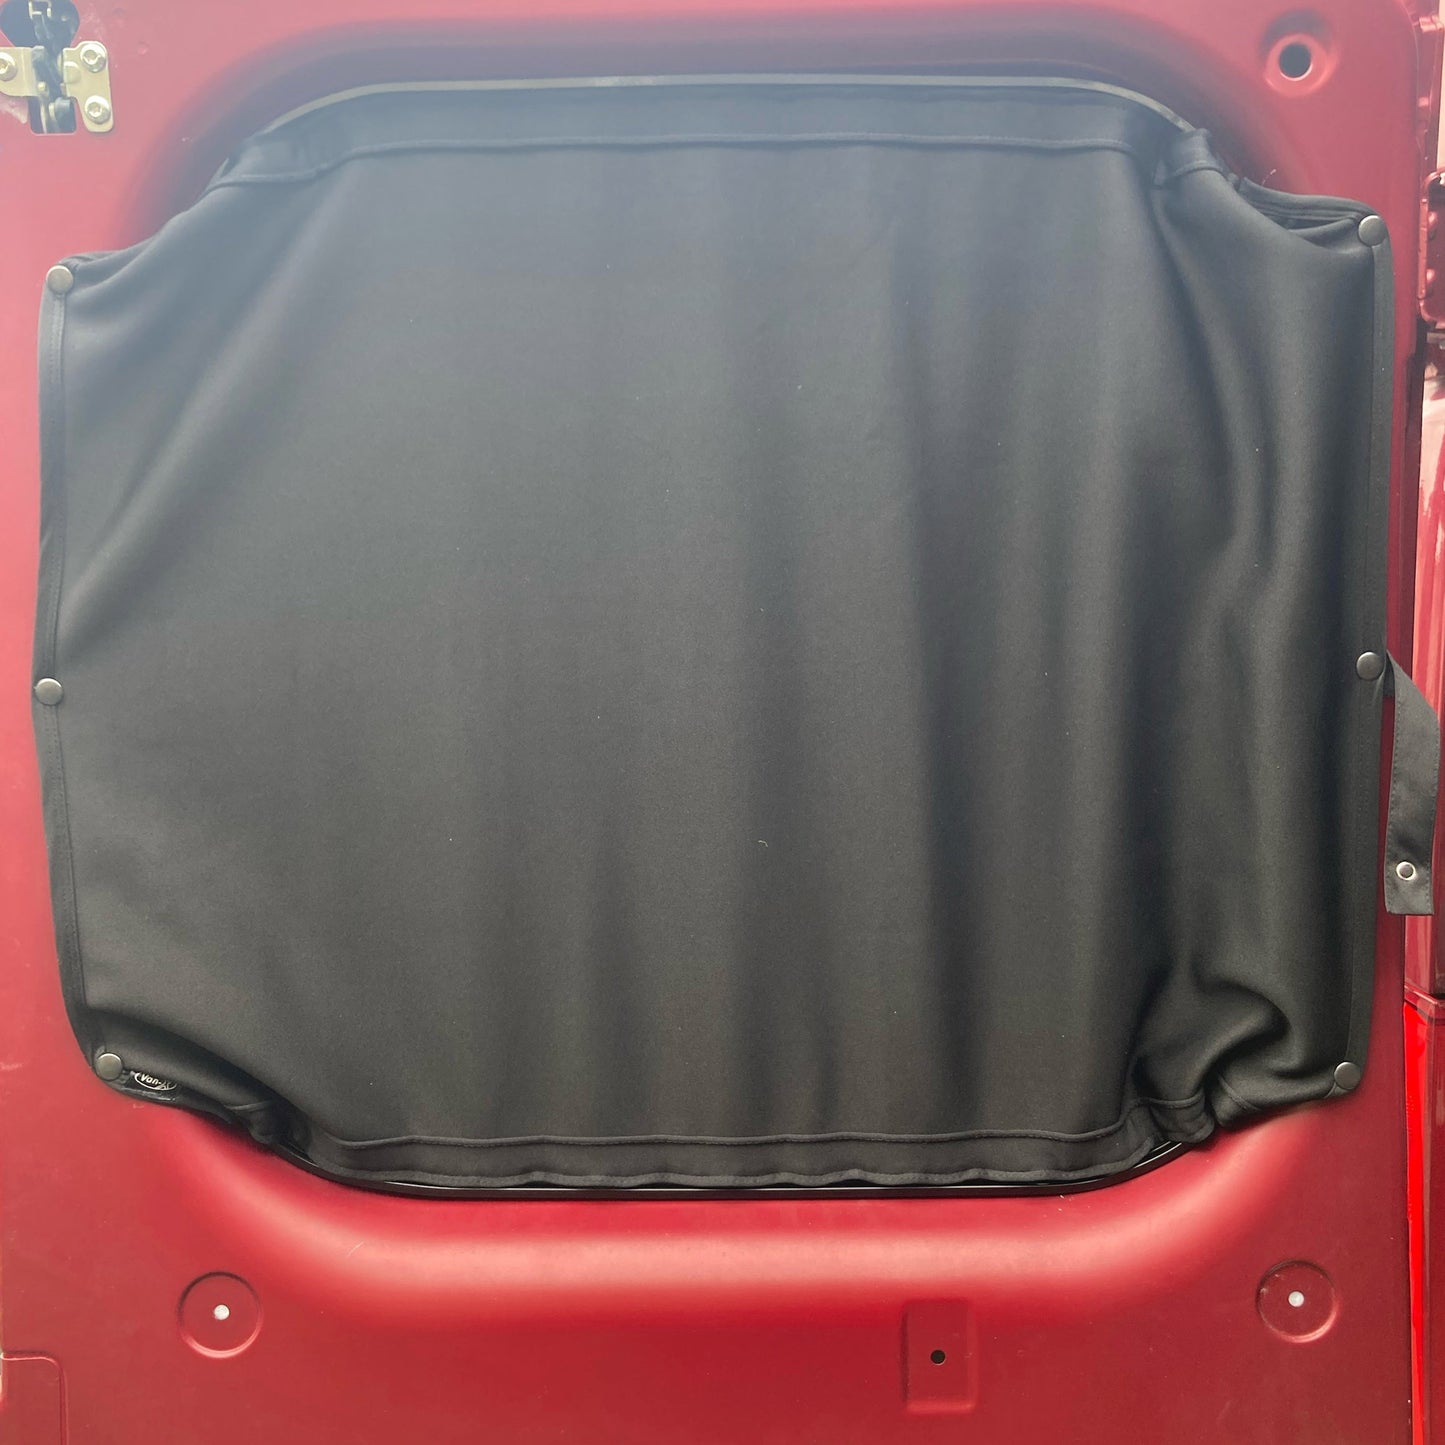 Toyota PROACE Premium 1 x tenda per finestra porta fienile Van-X